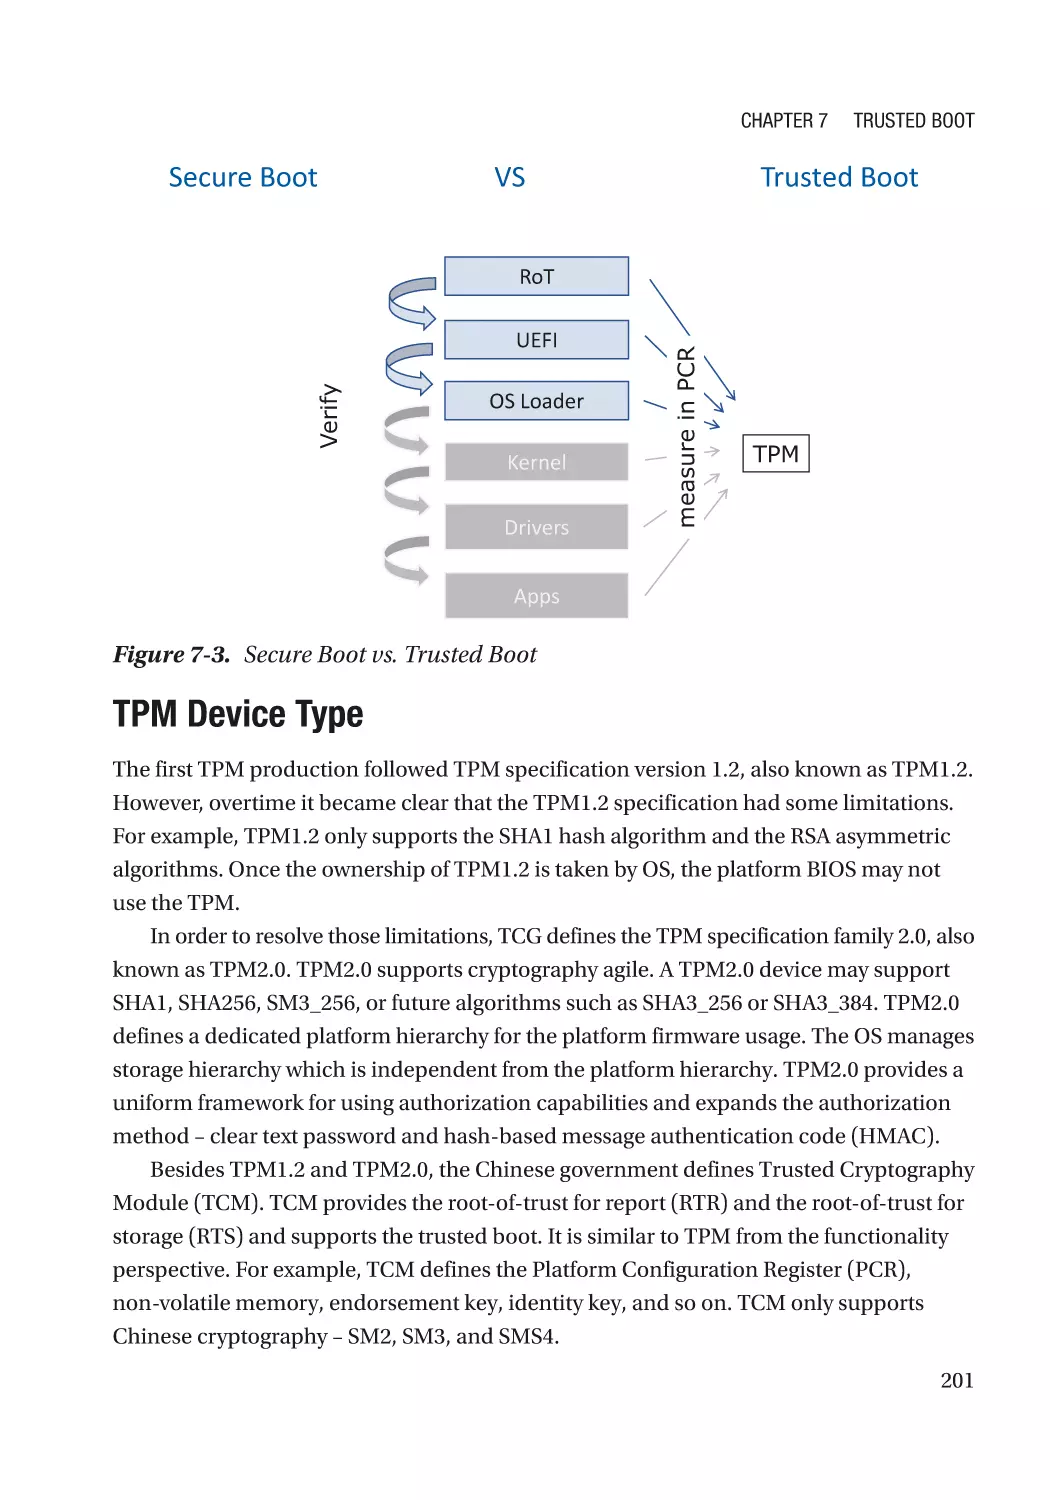 TPM Device Type